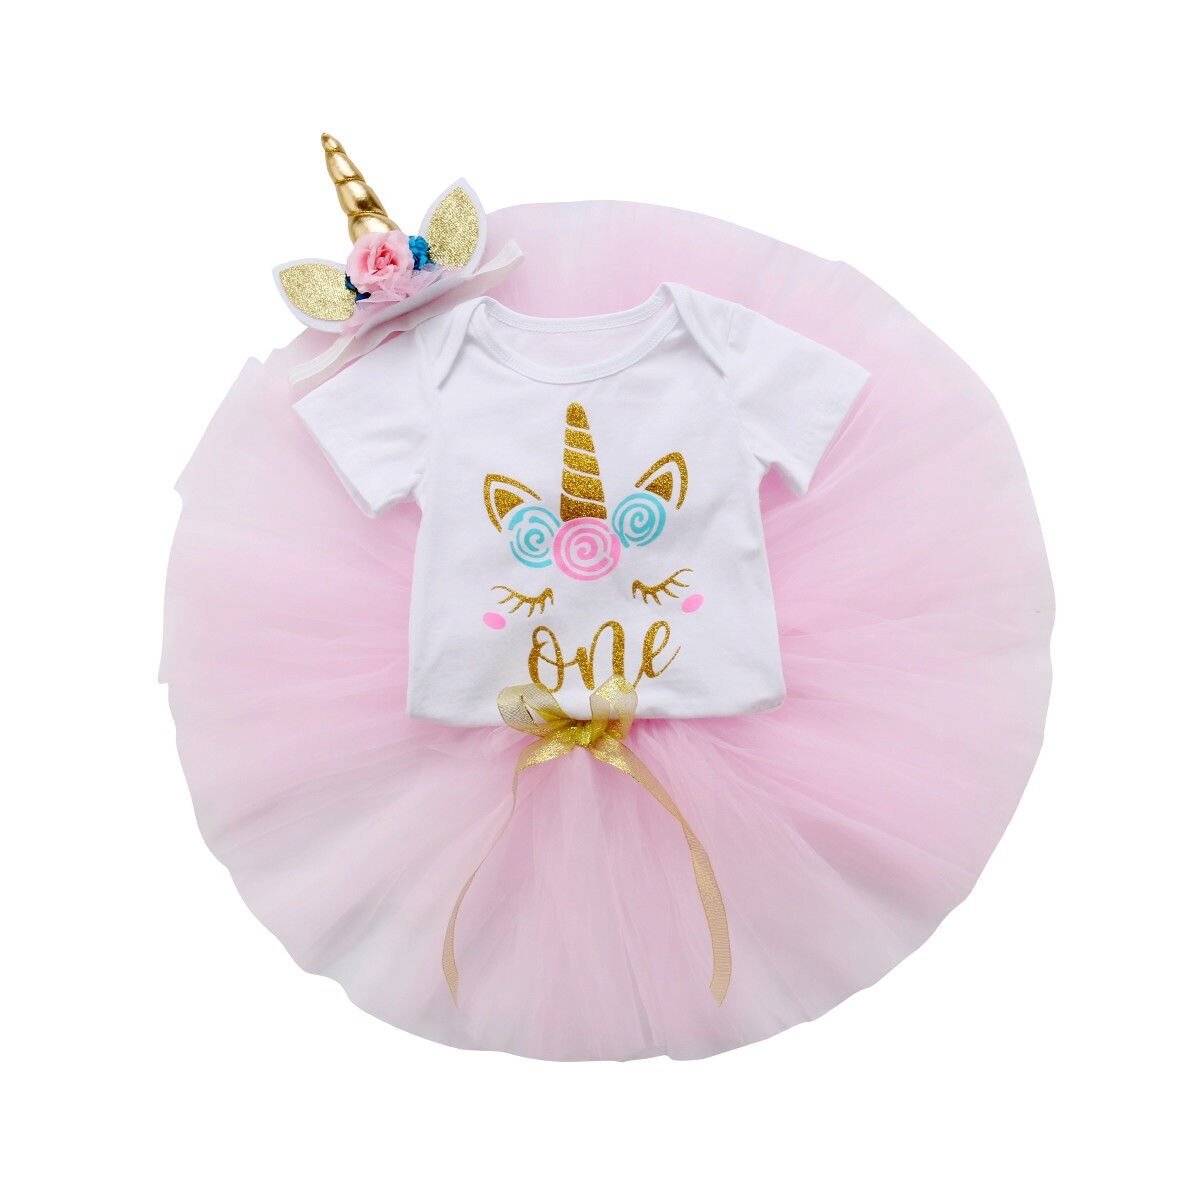 Baby Girls Romper Tutu Dress One-Piece Newborn Clothes Birthday Jumpsuit Outfits 